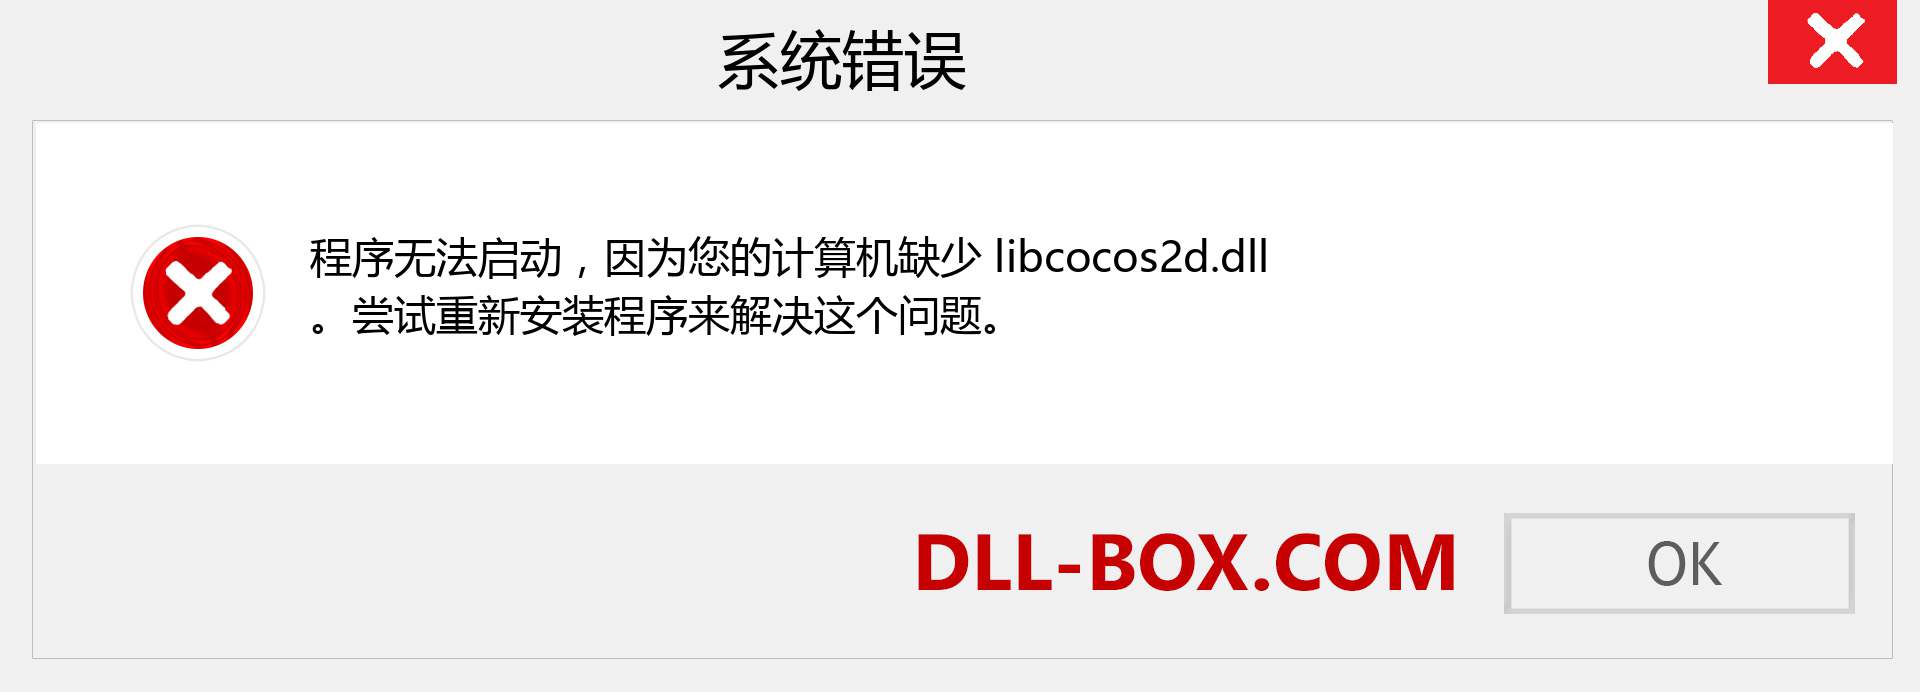 libcocos2d.dll 文件丢失？。 适用于 Windows 7、8、10 的下载 - 修复 Windows、照片、图像上的 libcocos2d dll 丢失错误